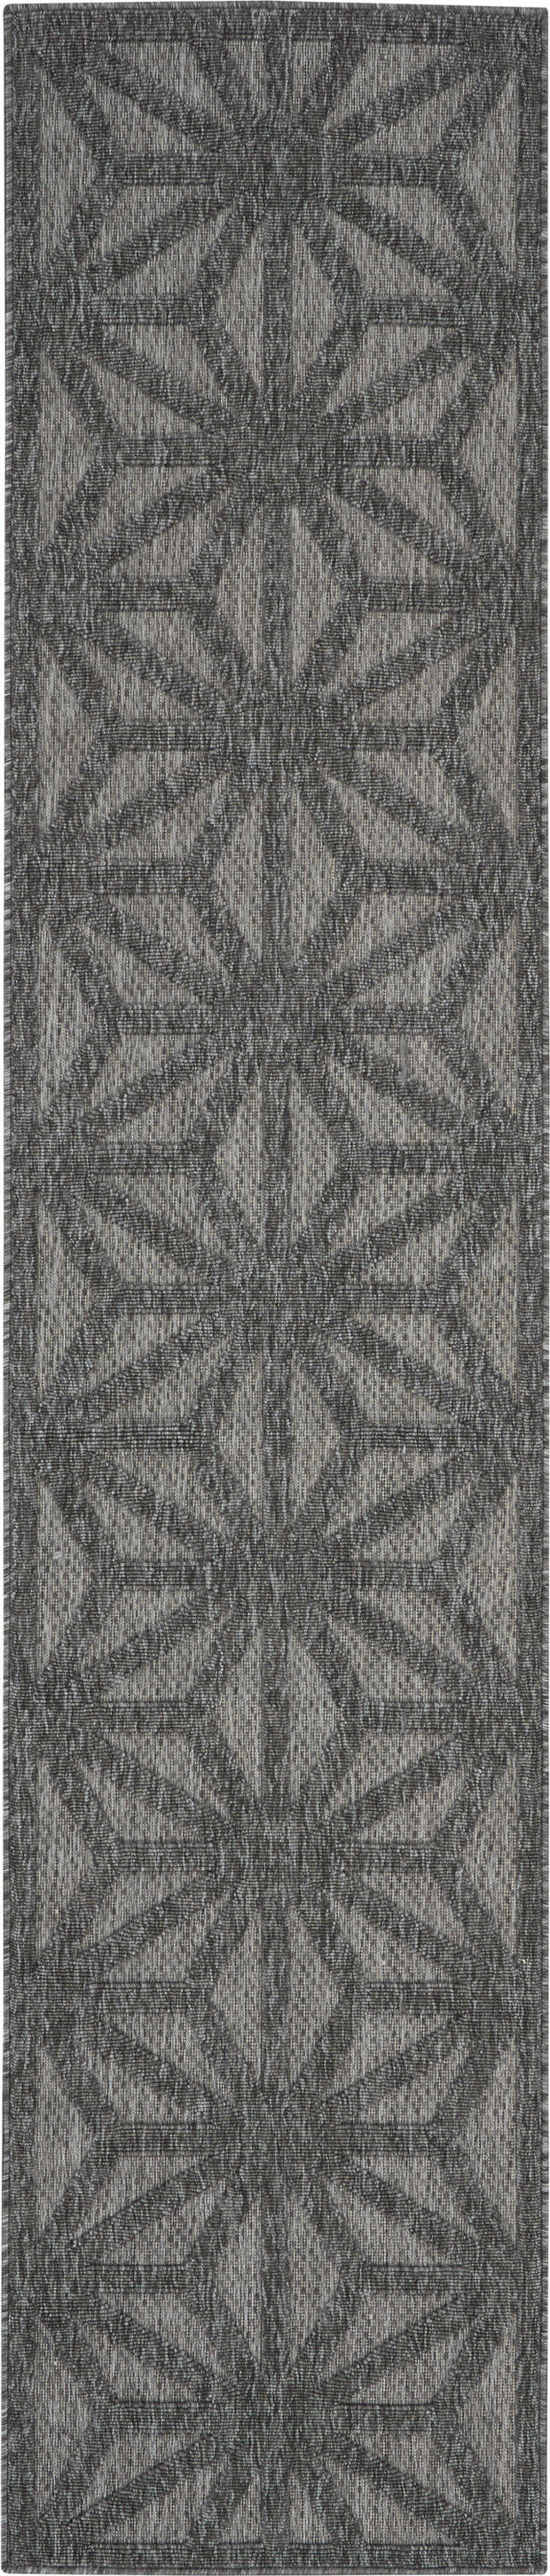 cozumel dark grey rug by nourison 99446199140 redo 3